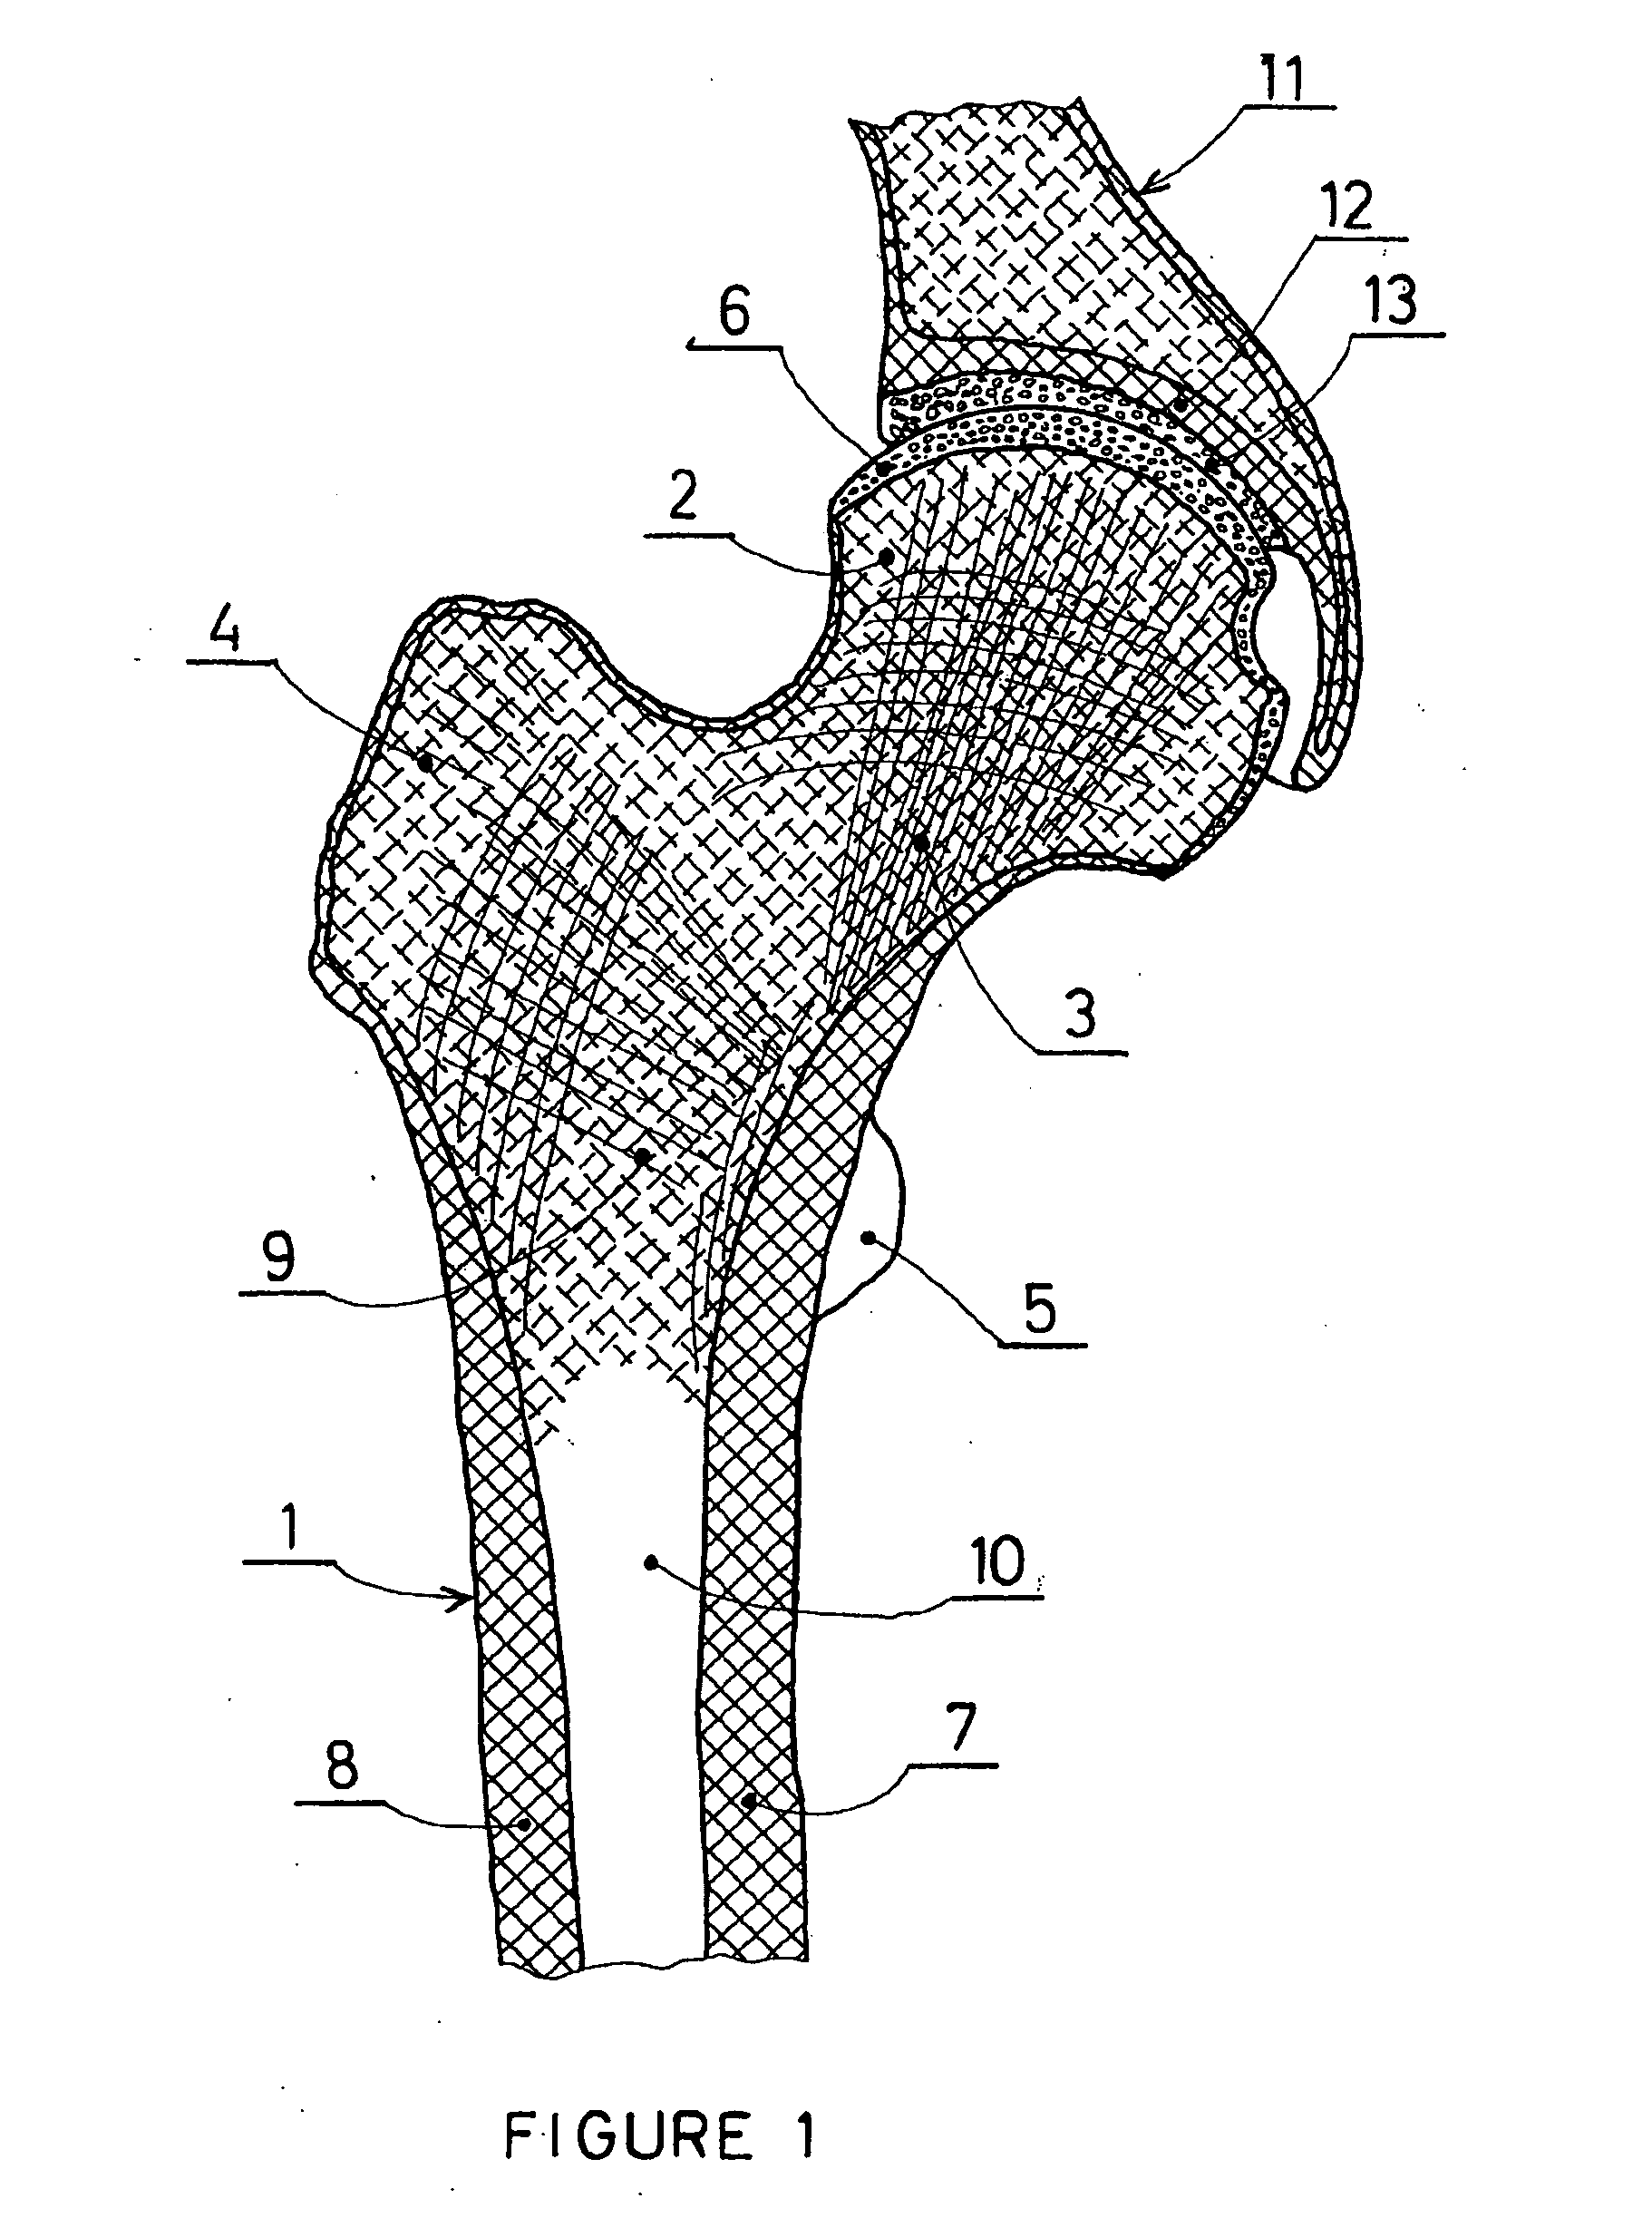 Partial hip prosthesis